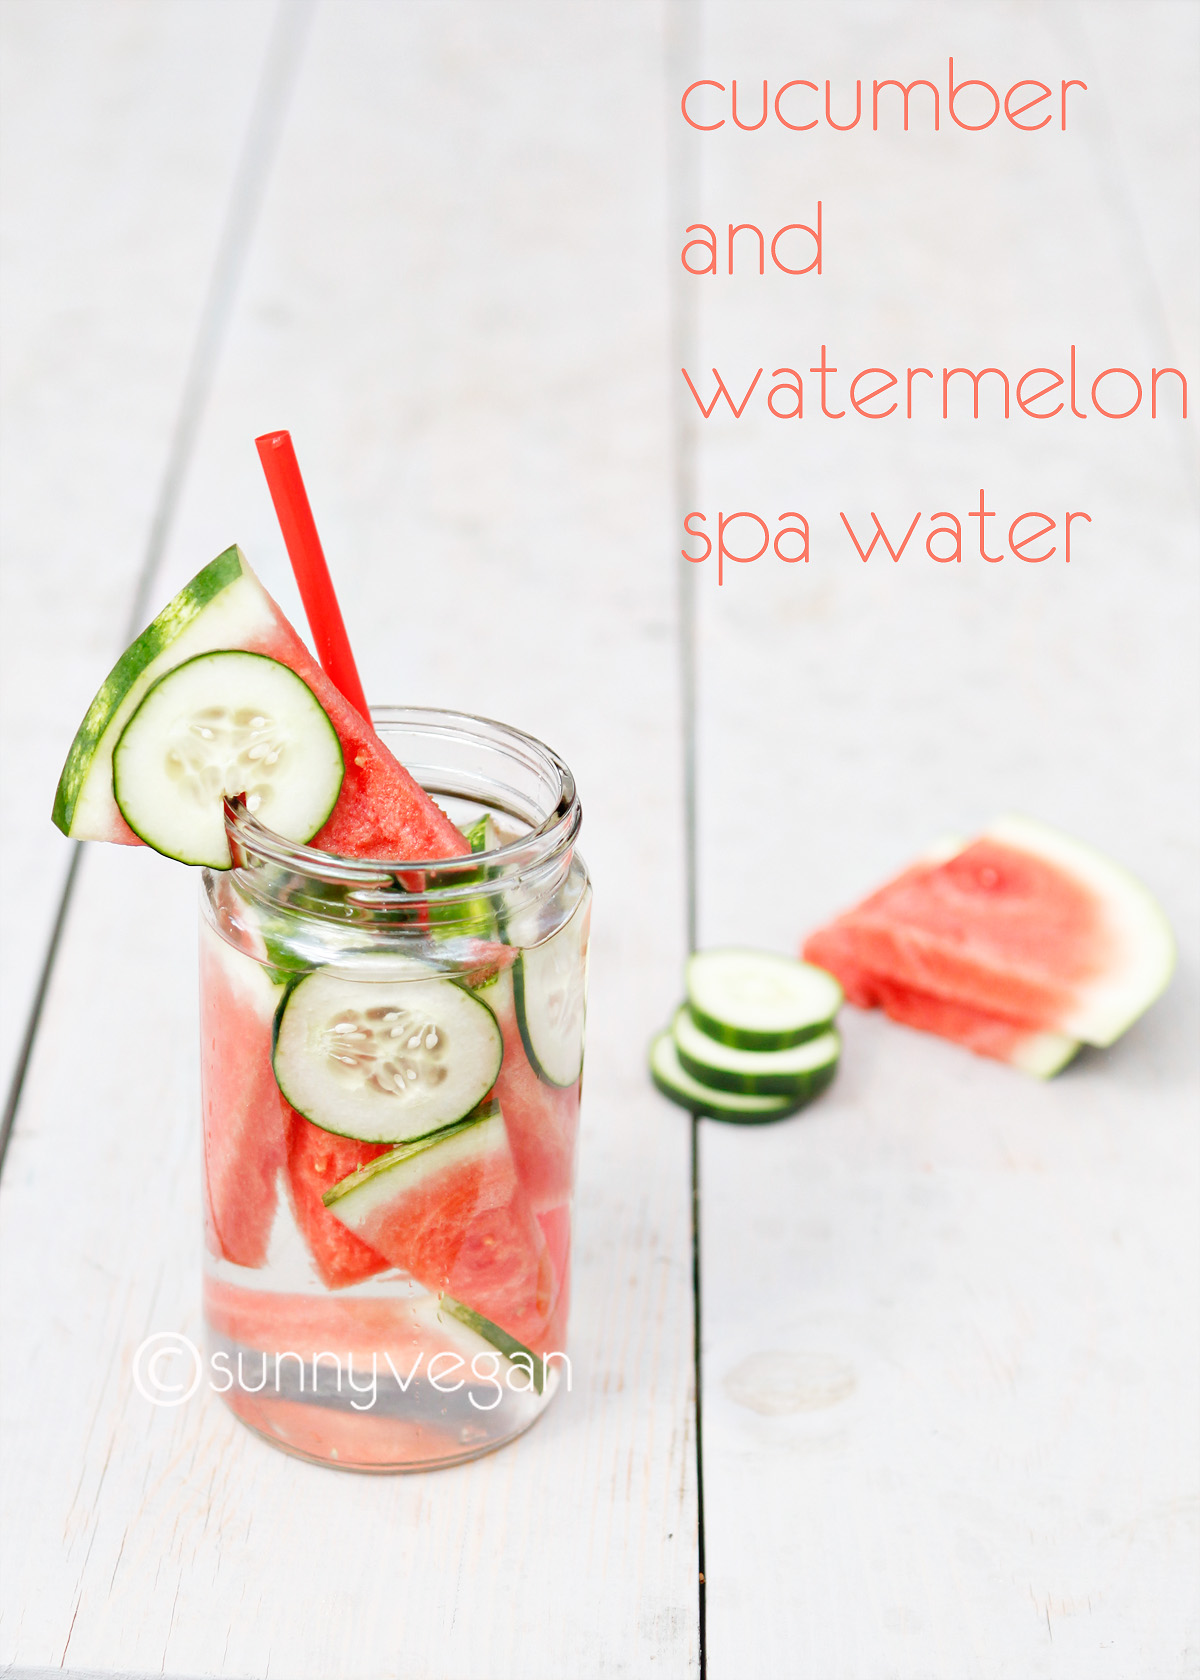 take 5 spa water recipe with watermelon and cucumber recipe via sunny vegan